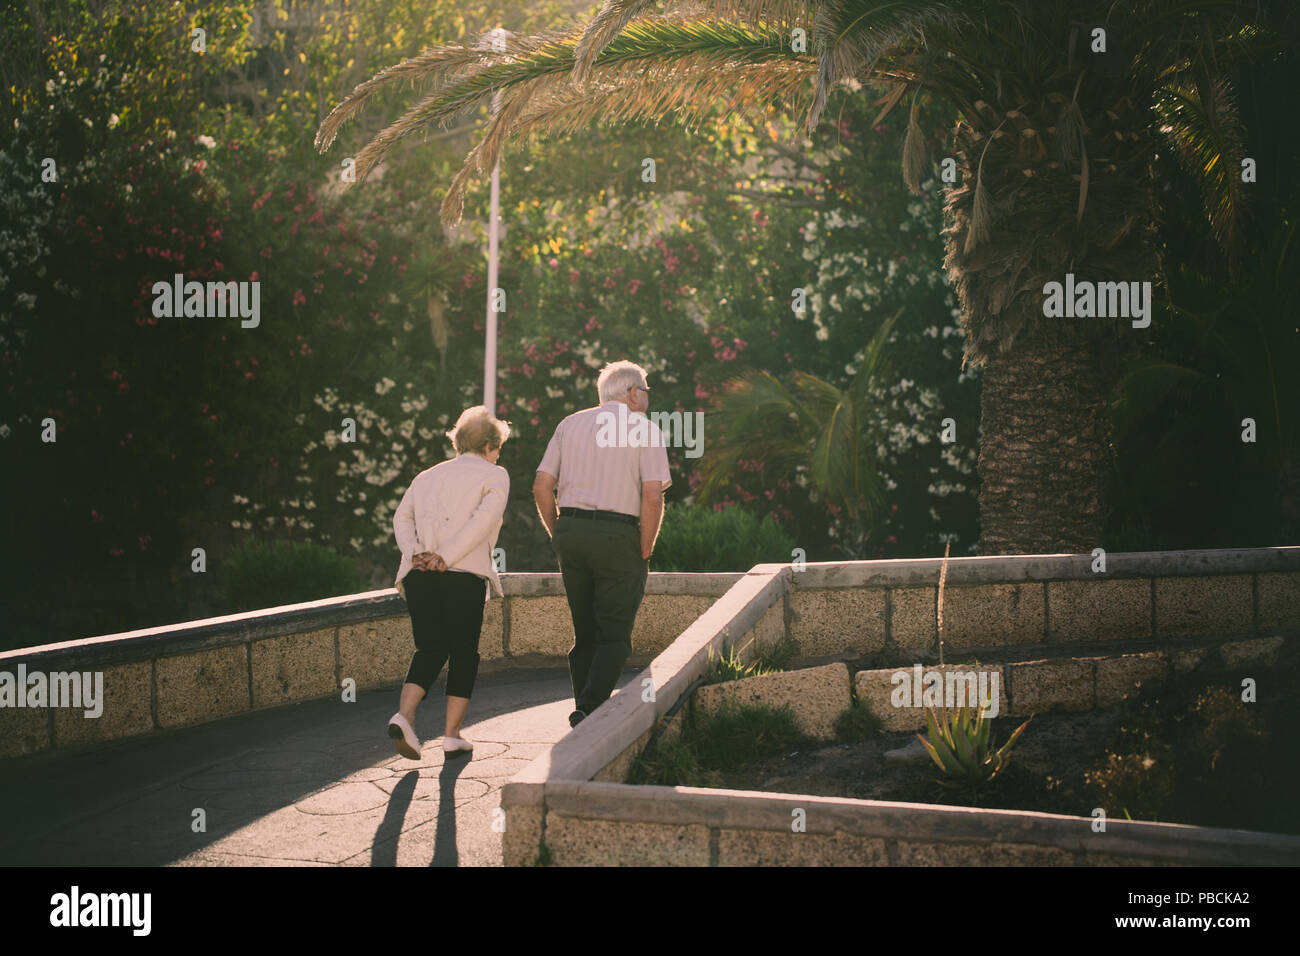 Older couple walking on promenade along palm trees. Stock Photo